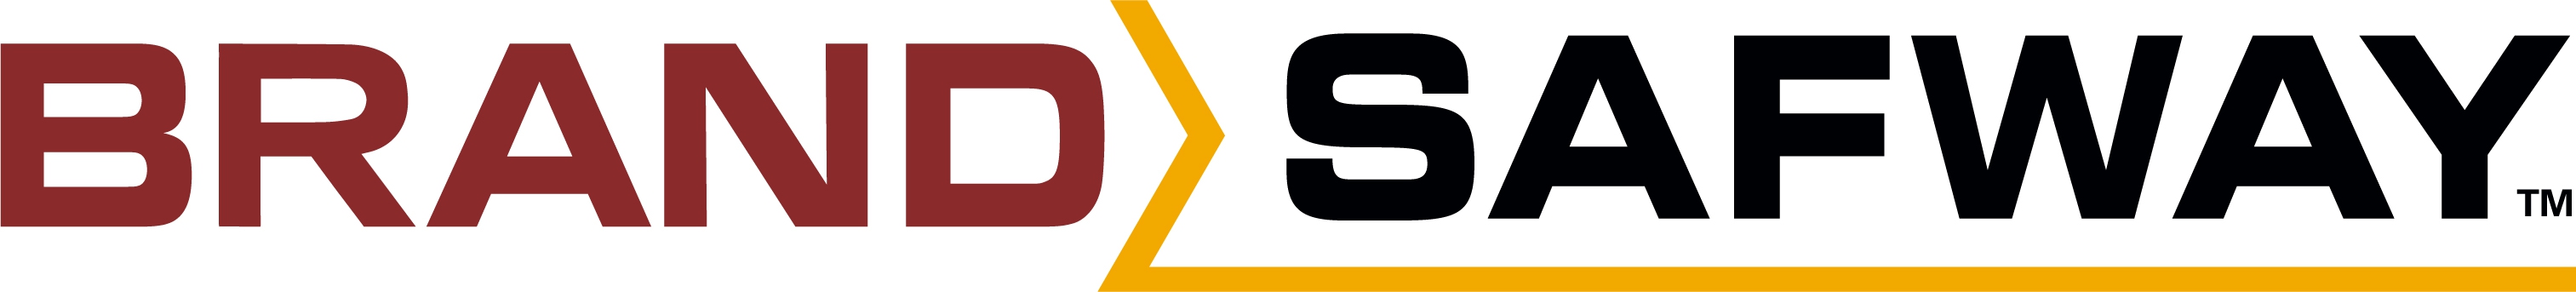 BrandSafway logo